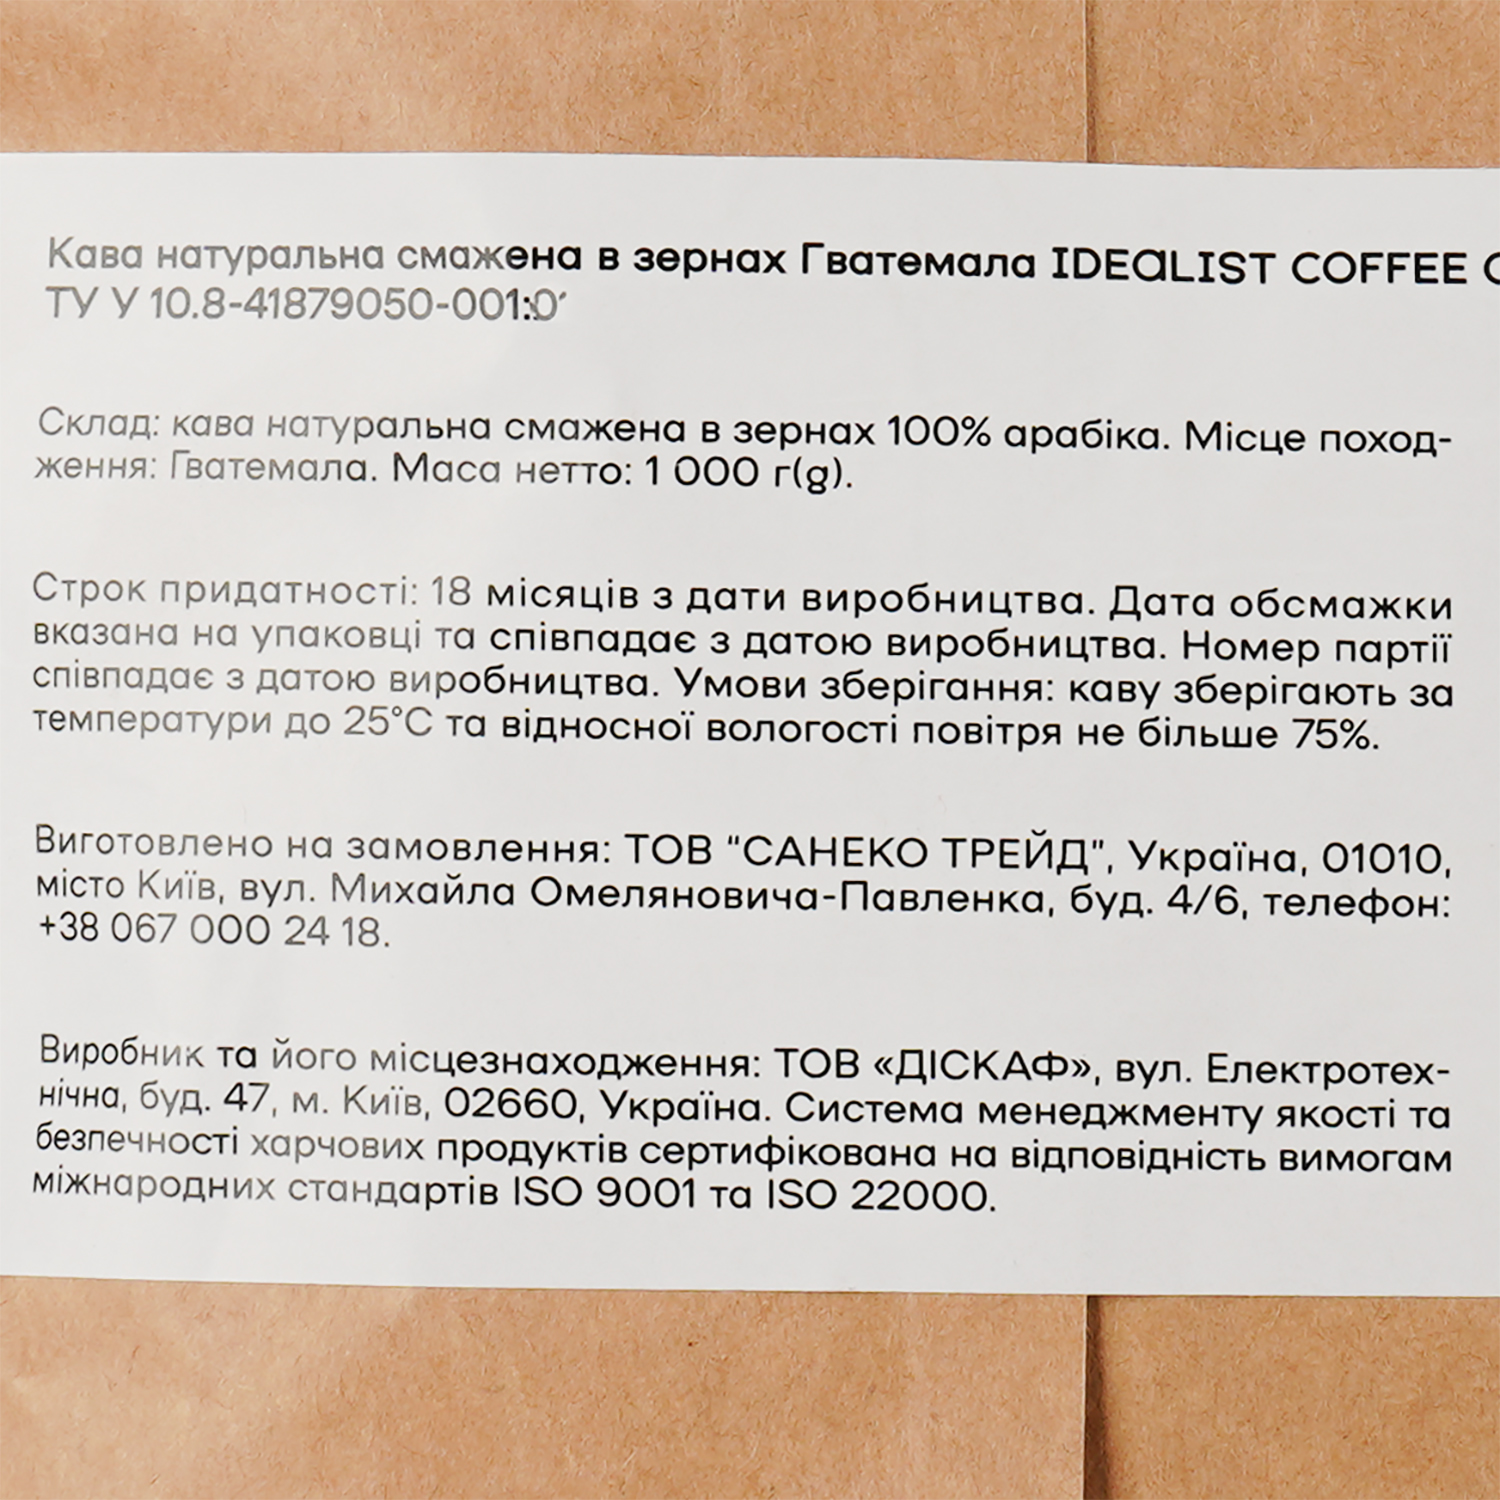 Кофе в зернах Idealist Coffee Co Гватемала фильтр 1 кг - фото 4